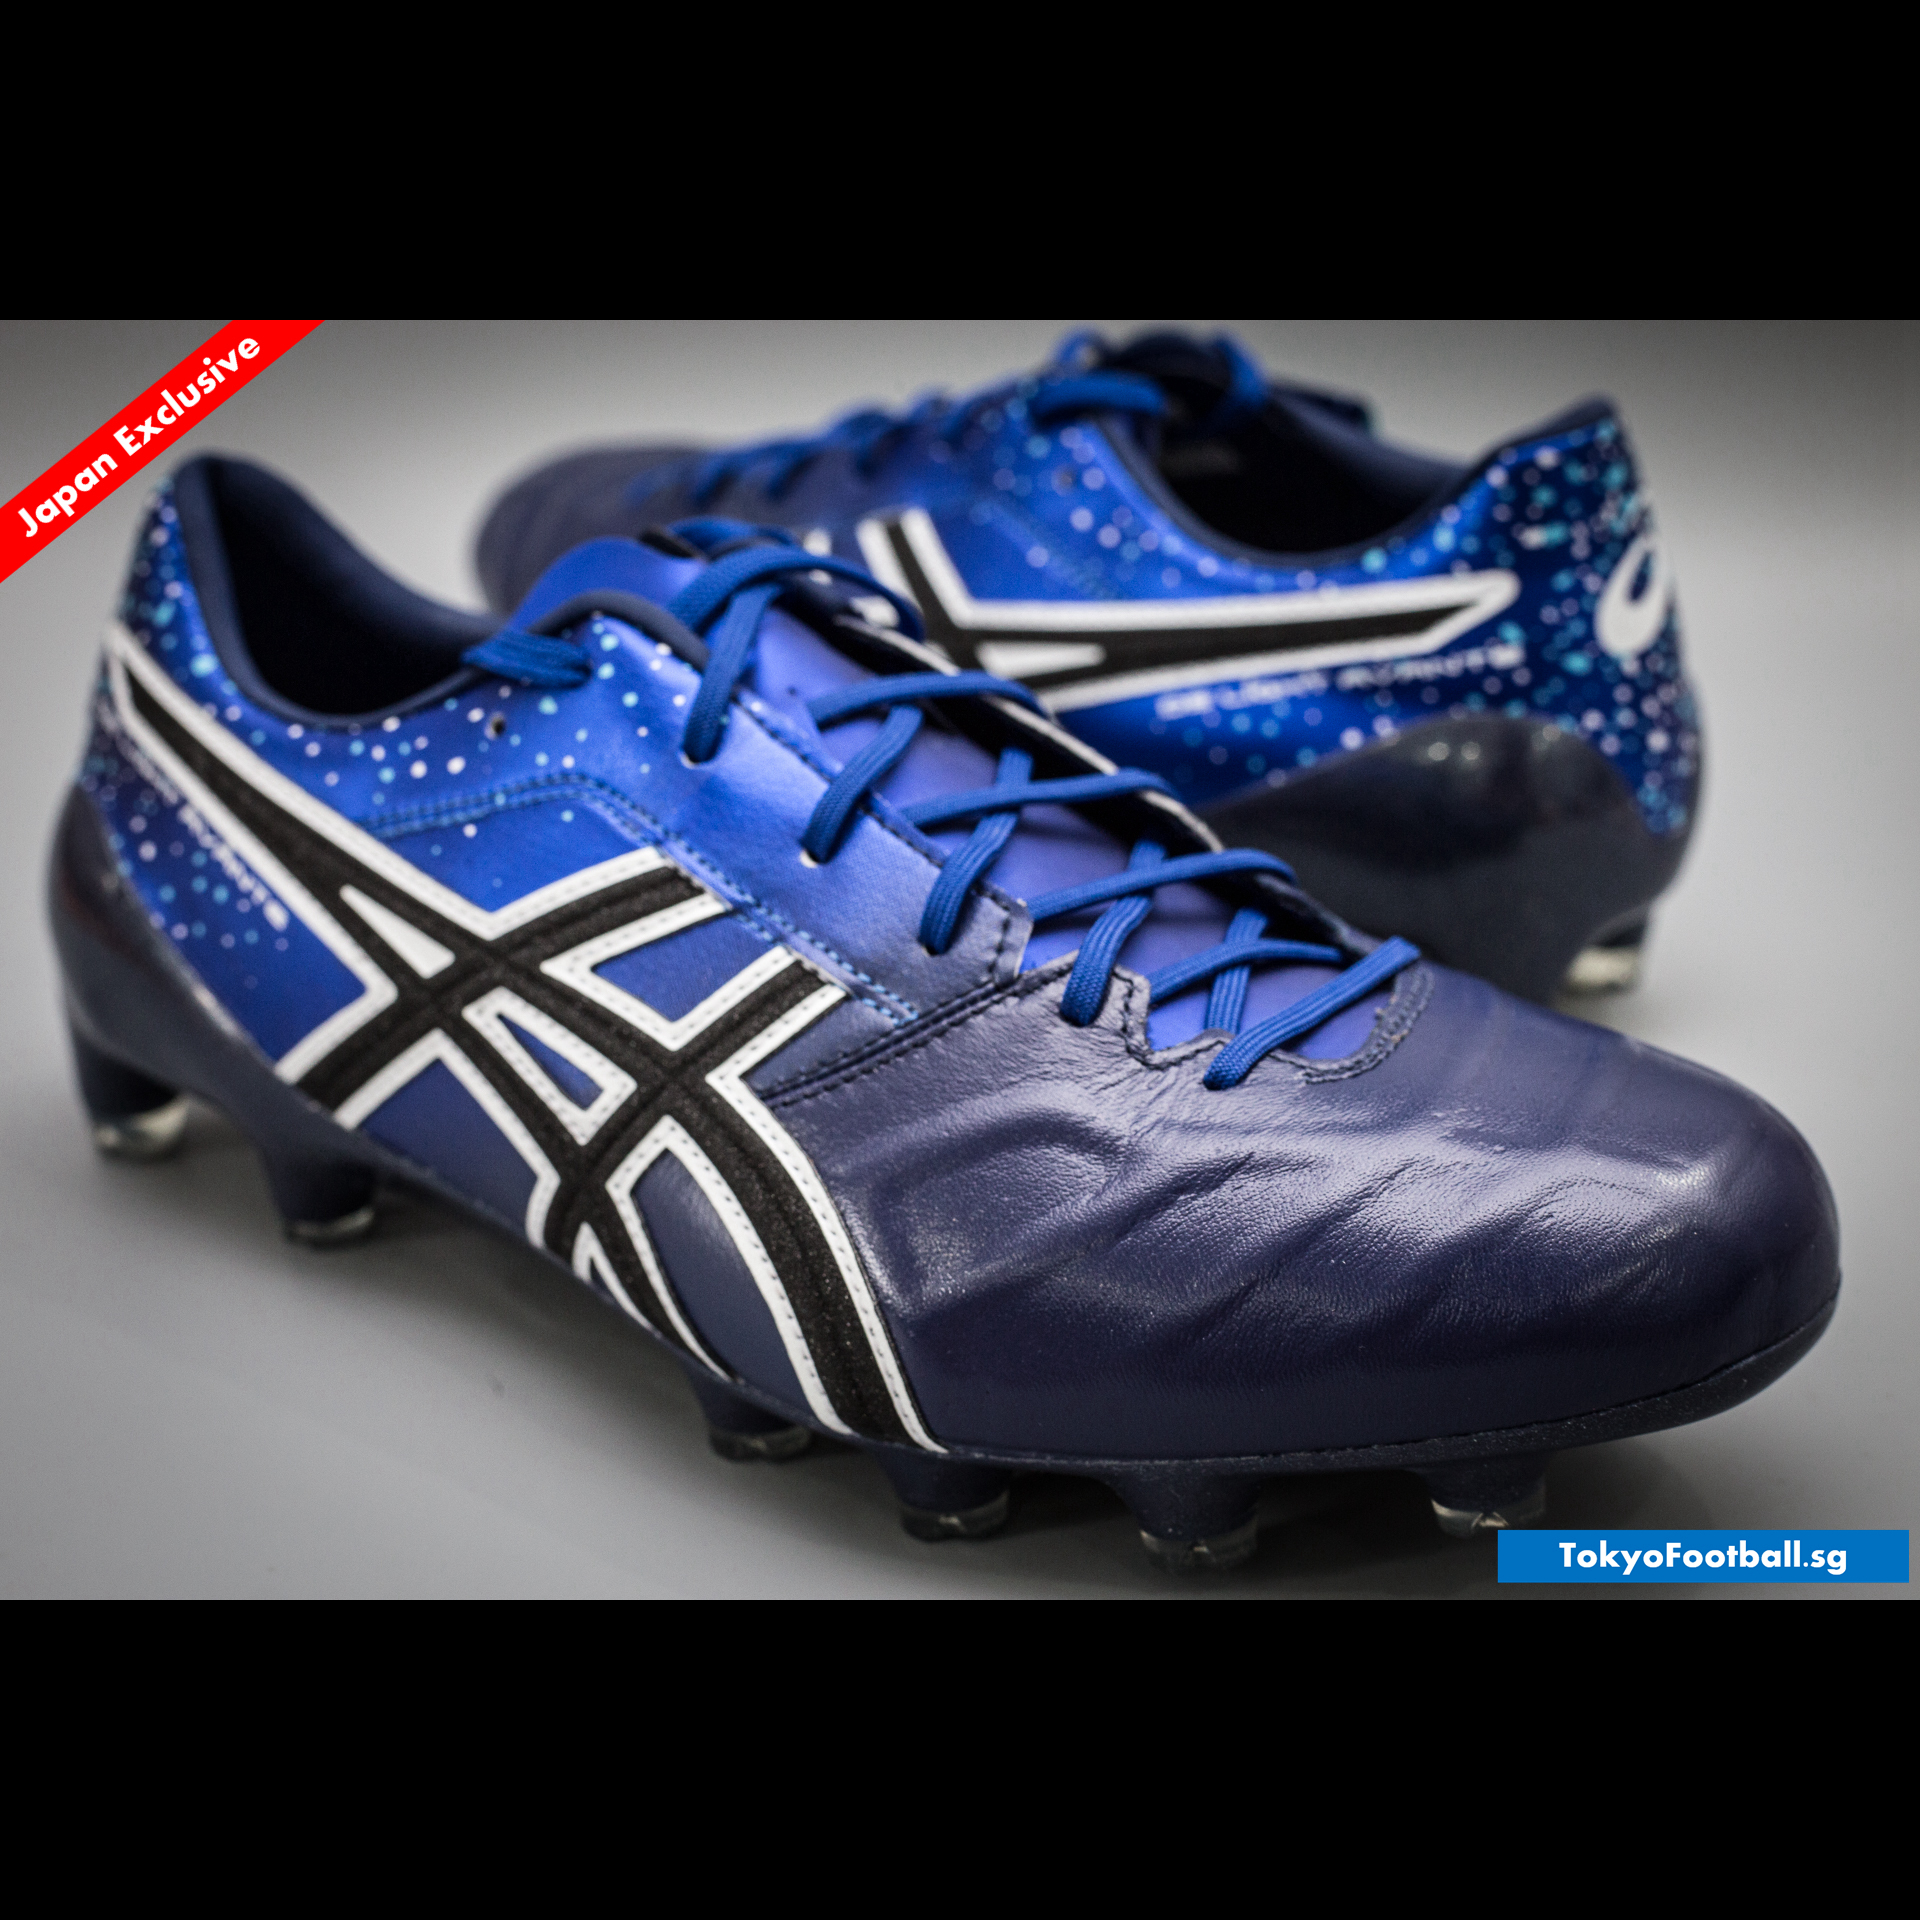 buy asics football boots online